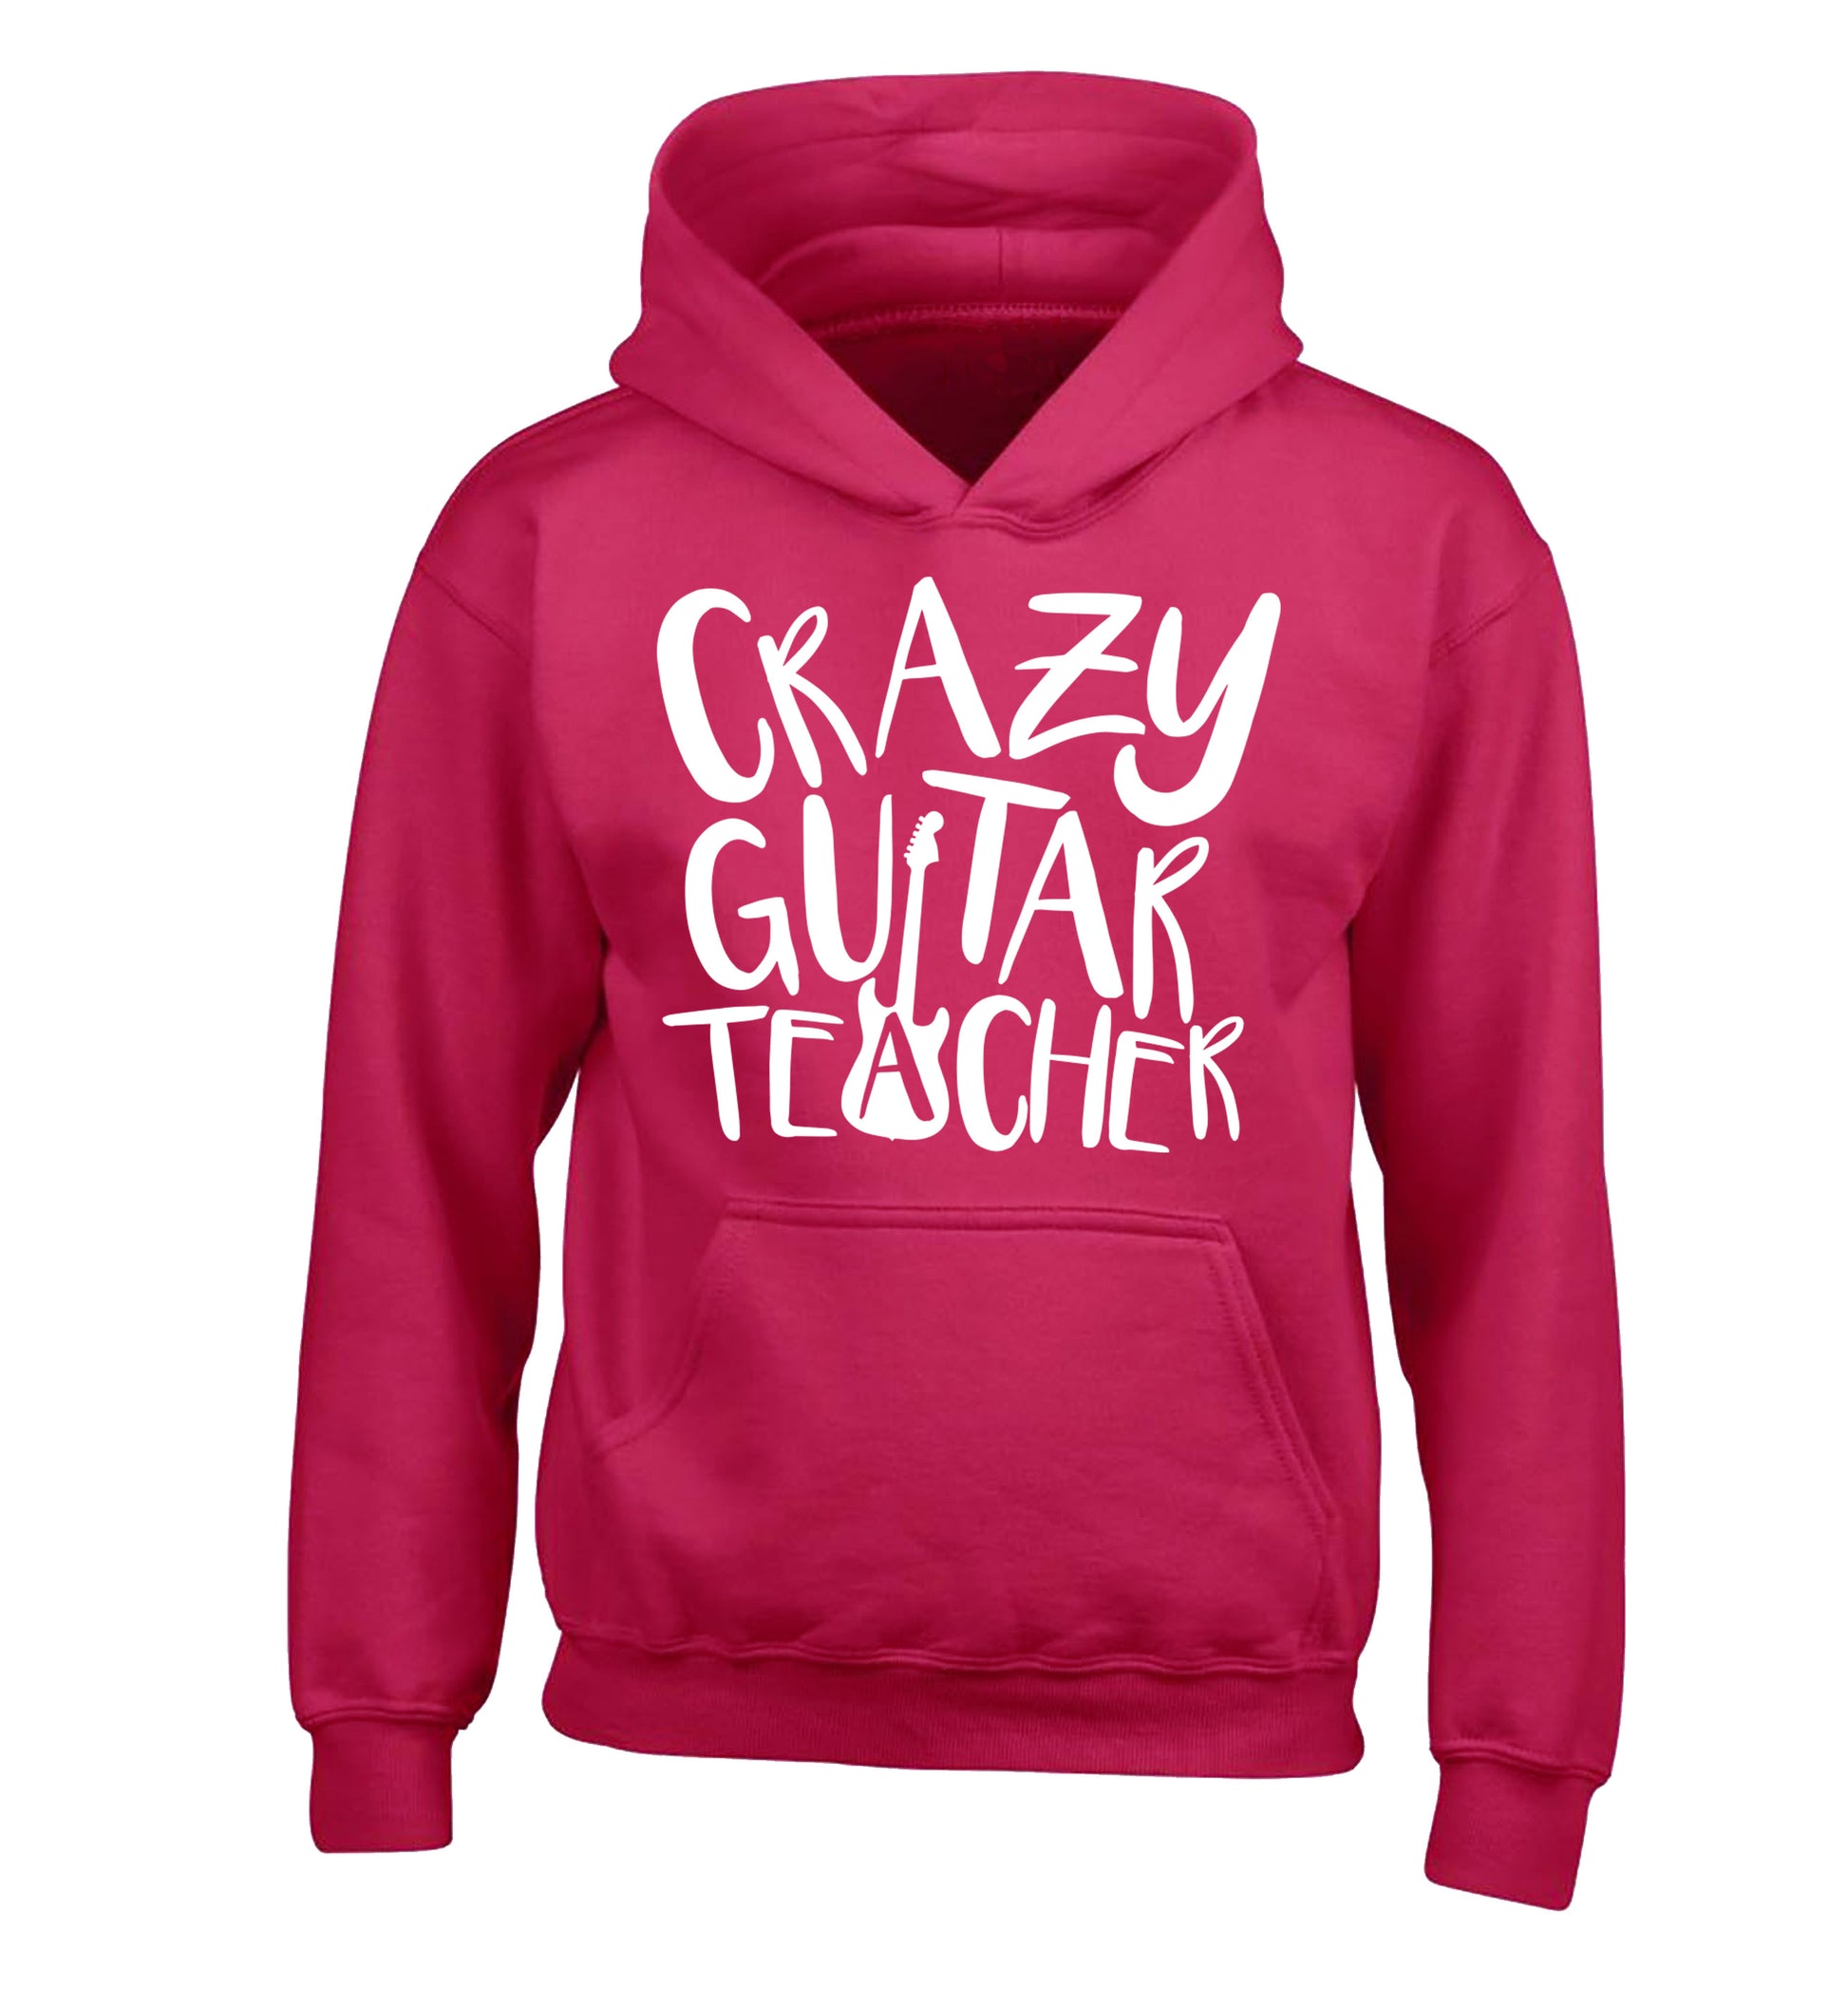 Crazy guitar teacher children's pink hoodie 12-13 Years